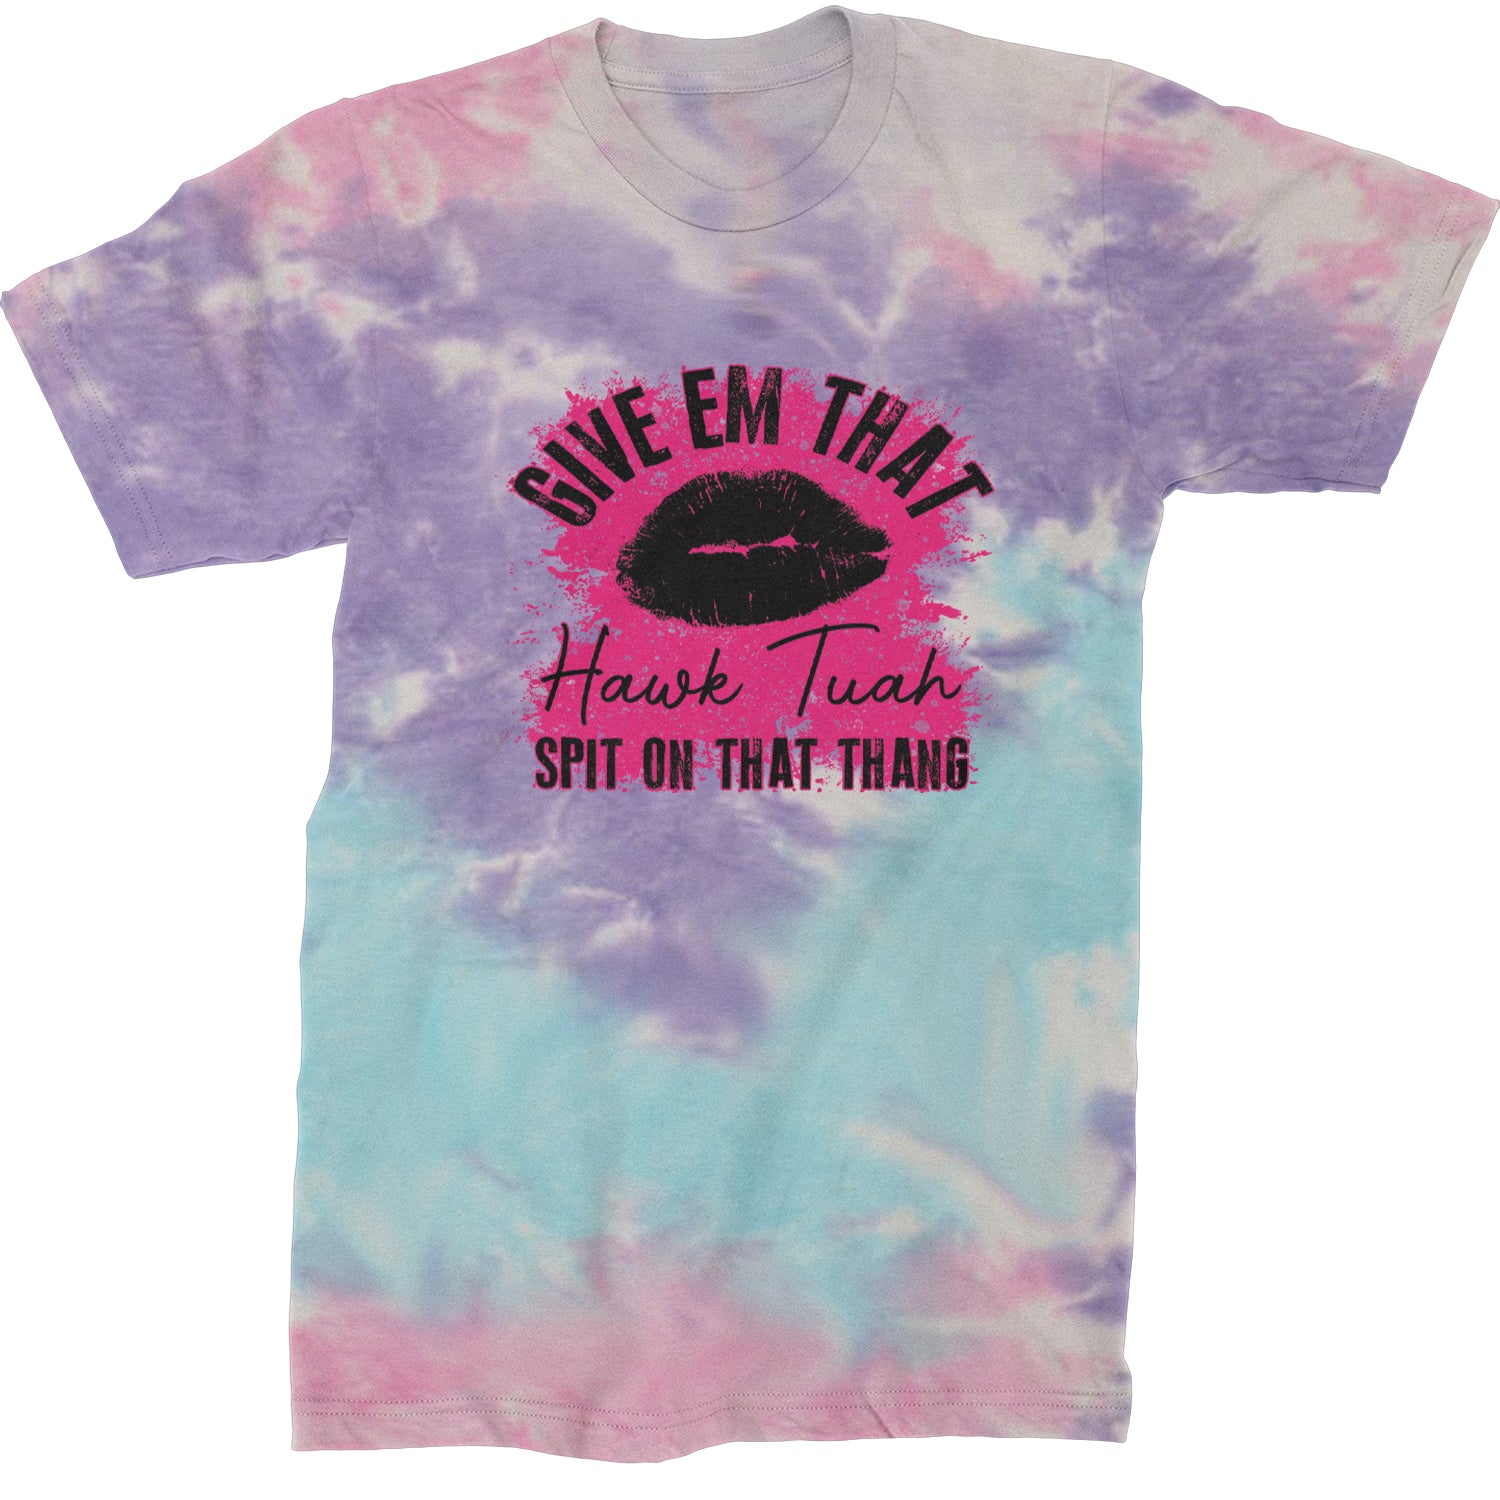 Give 'Em Hawk Tuah Spit On That Thang Mens T-shirt Tie-Dye Cotton Candy